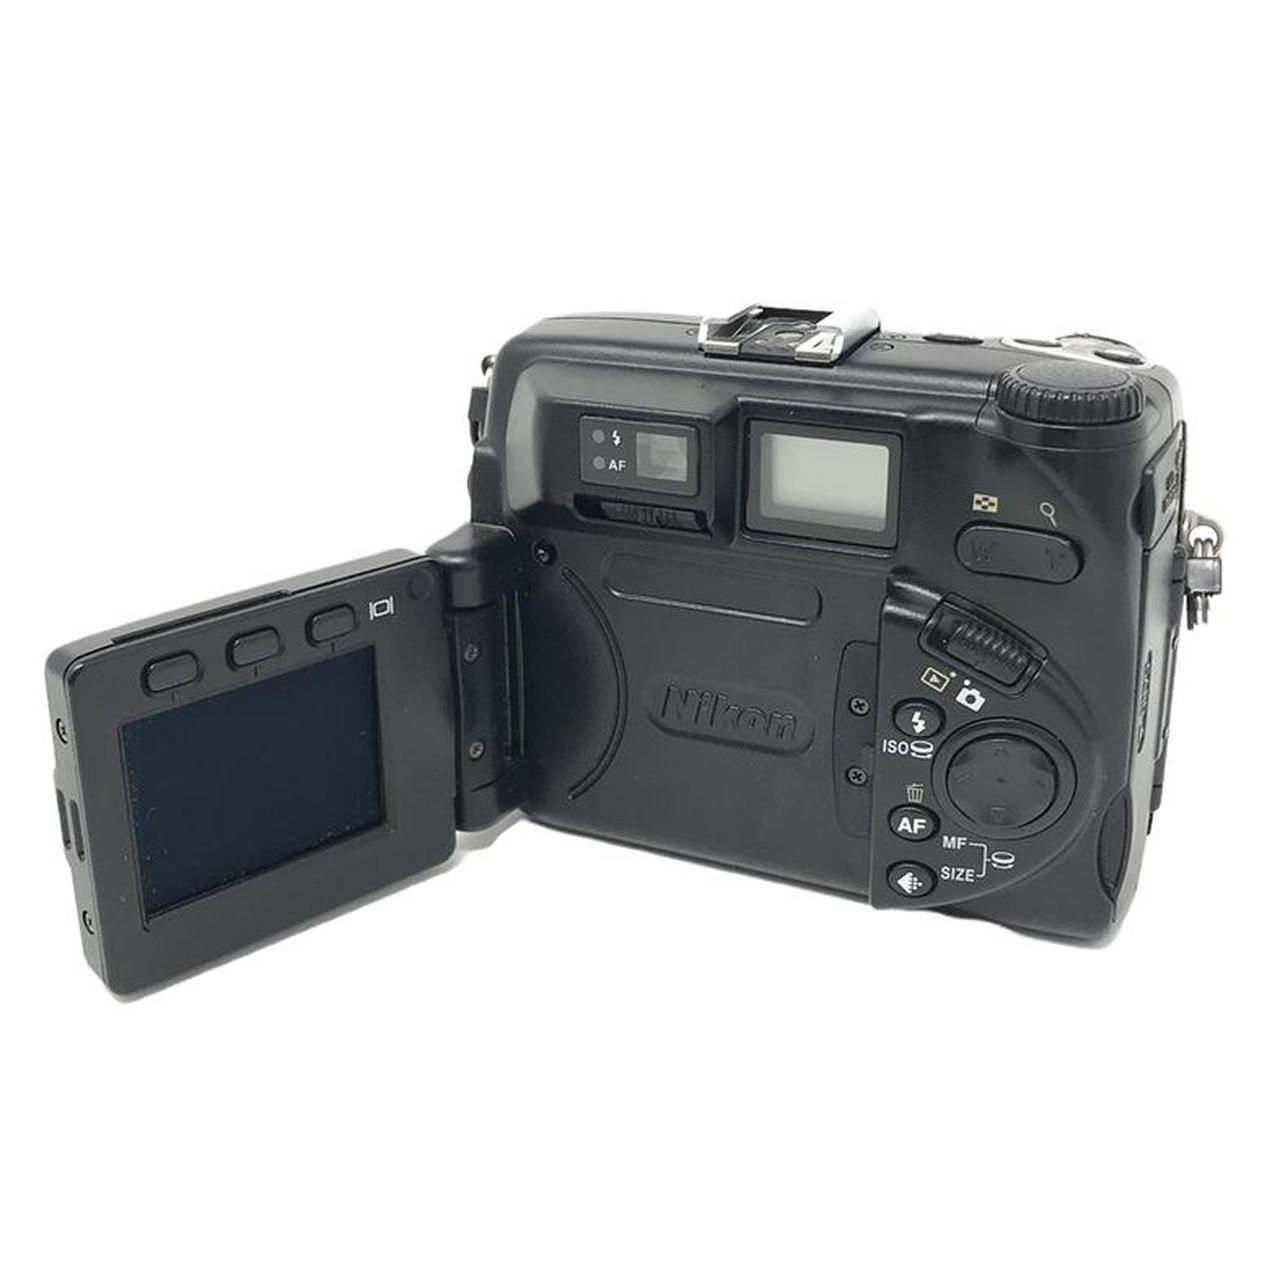 Product Image 4 - Nikon Coolpix 5000 Digital Camera

Comes